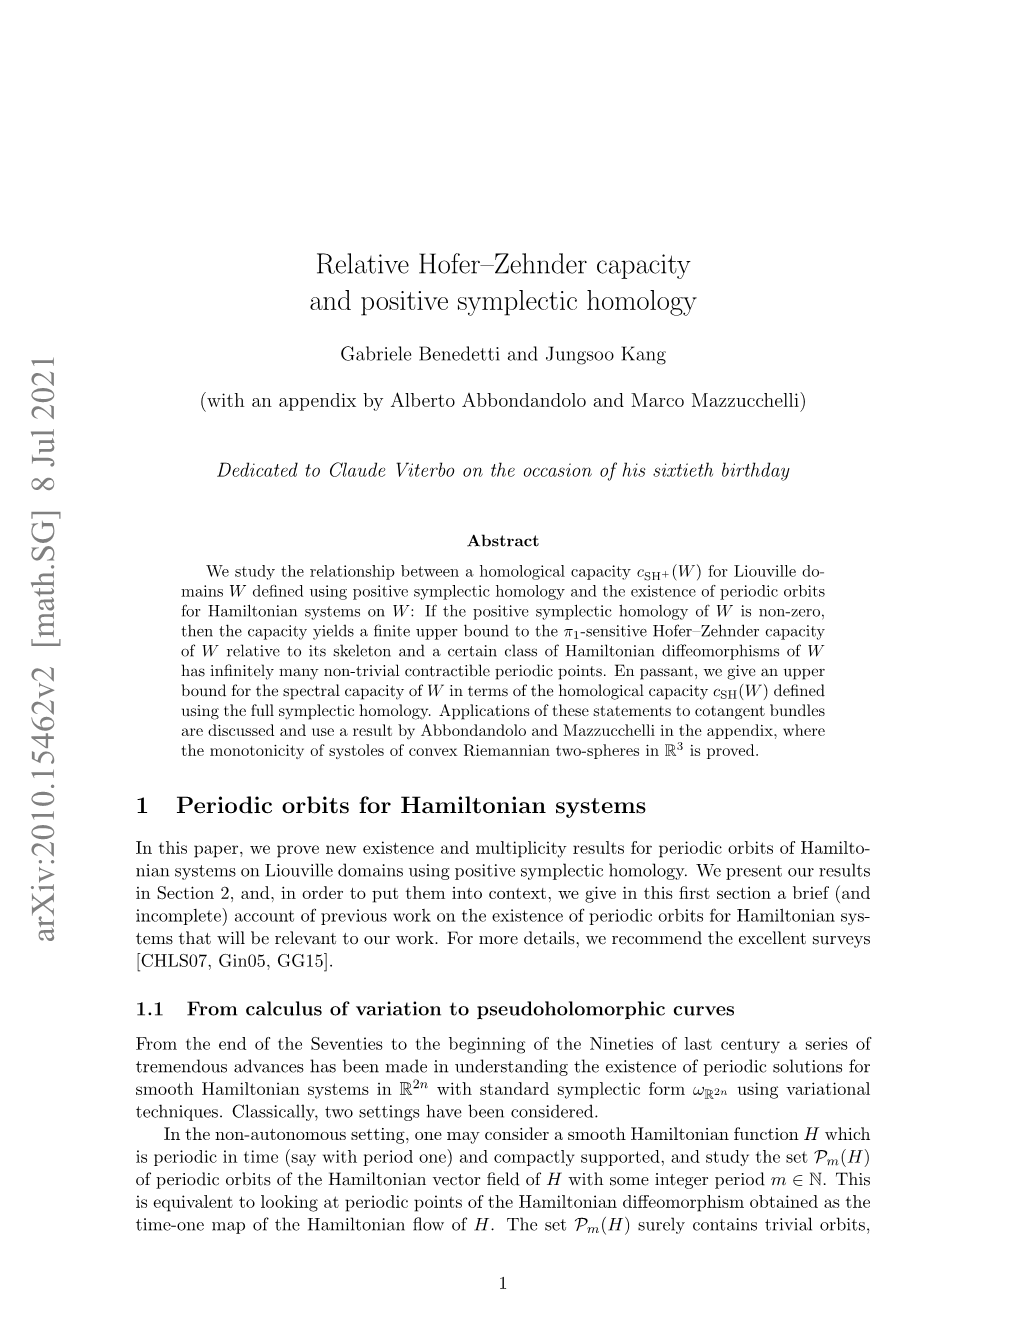 Relative Hofer-Zehnder Capacity and Positive Symplectic Homology